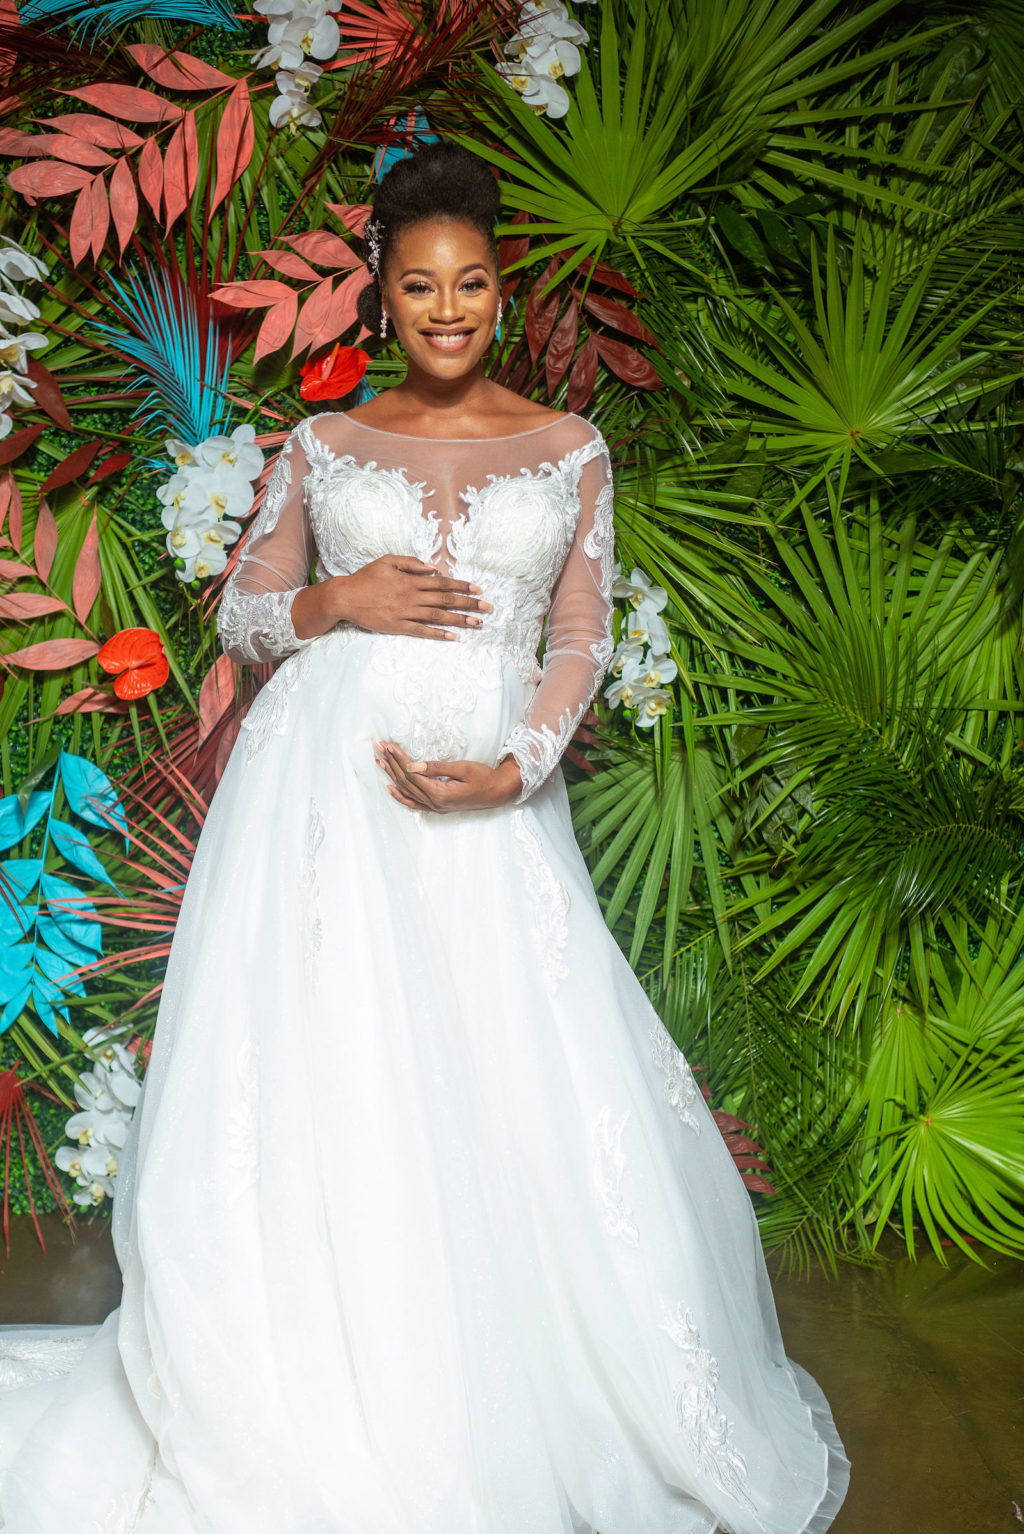 Tampa Bay Wedding Fashion Show in Ybor City, Bride in A Line Pregnancy Wedding Dress with Long Illusion Lace Sleeves | Designer Royal Bridal | Florida Venue 7th + Grove